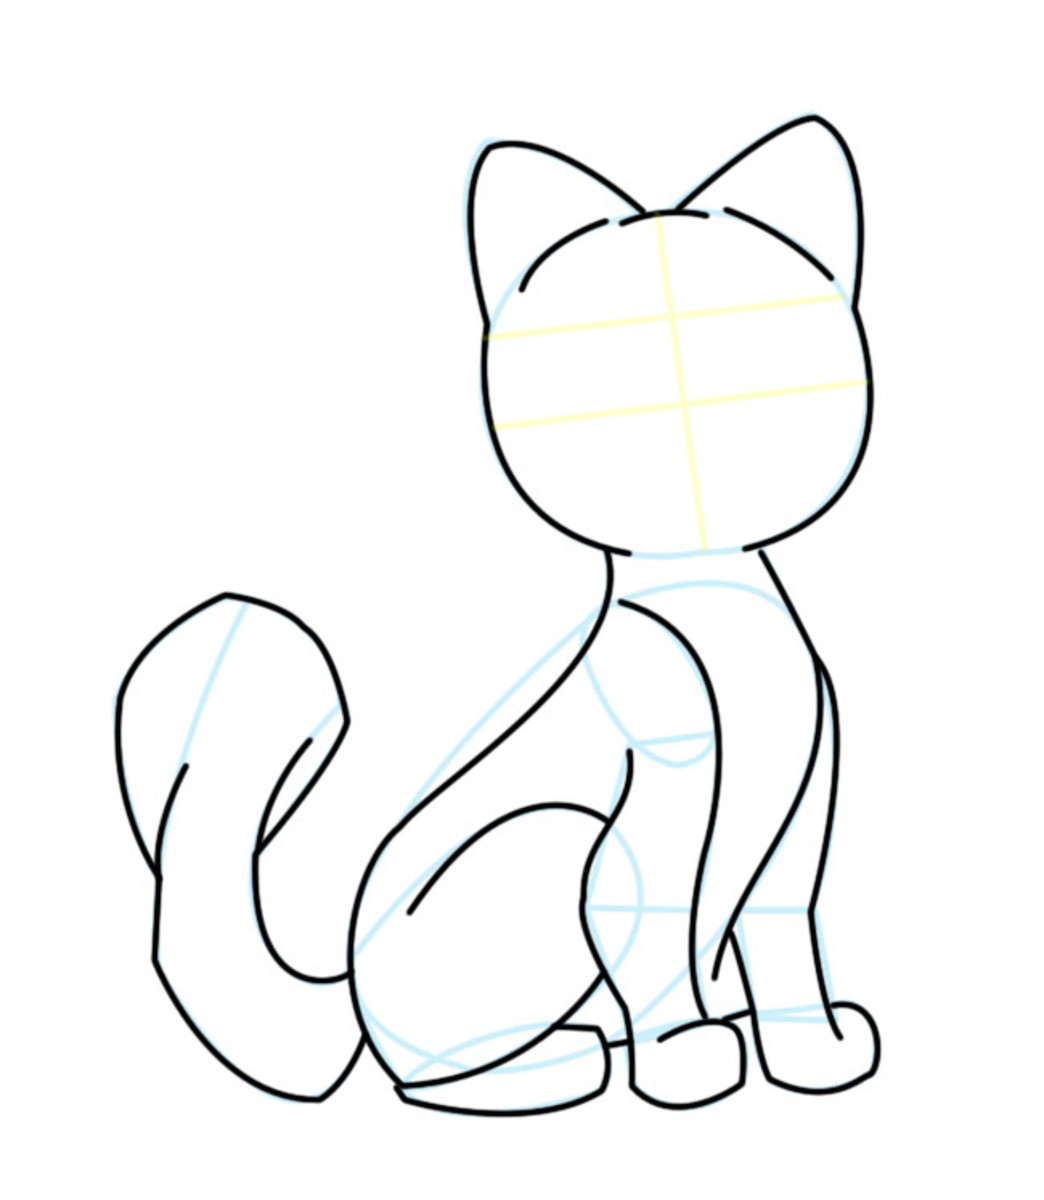 Drawing a Cartoon Cat | FeltMagnet